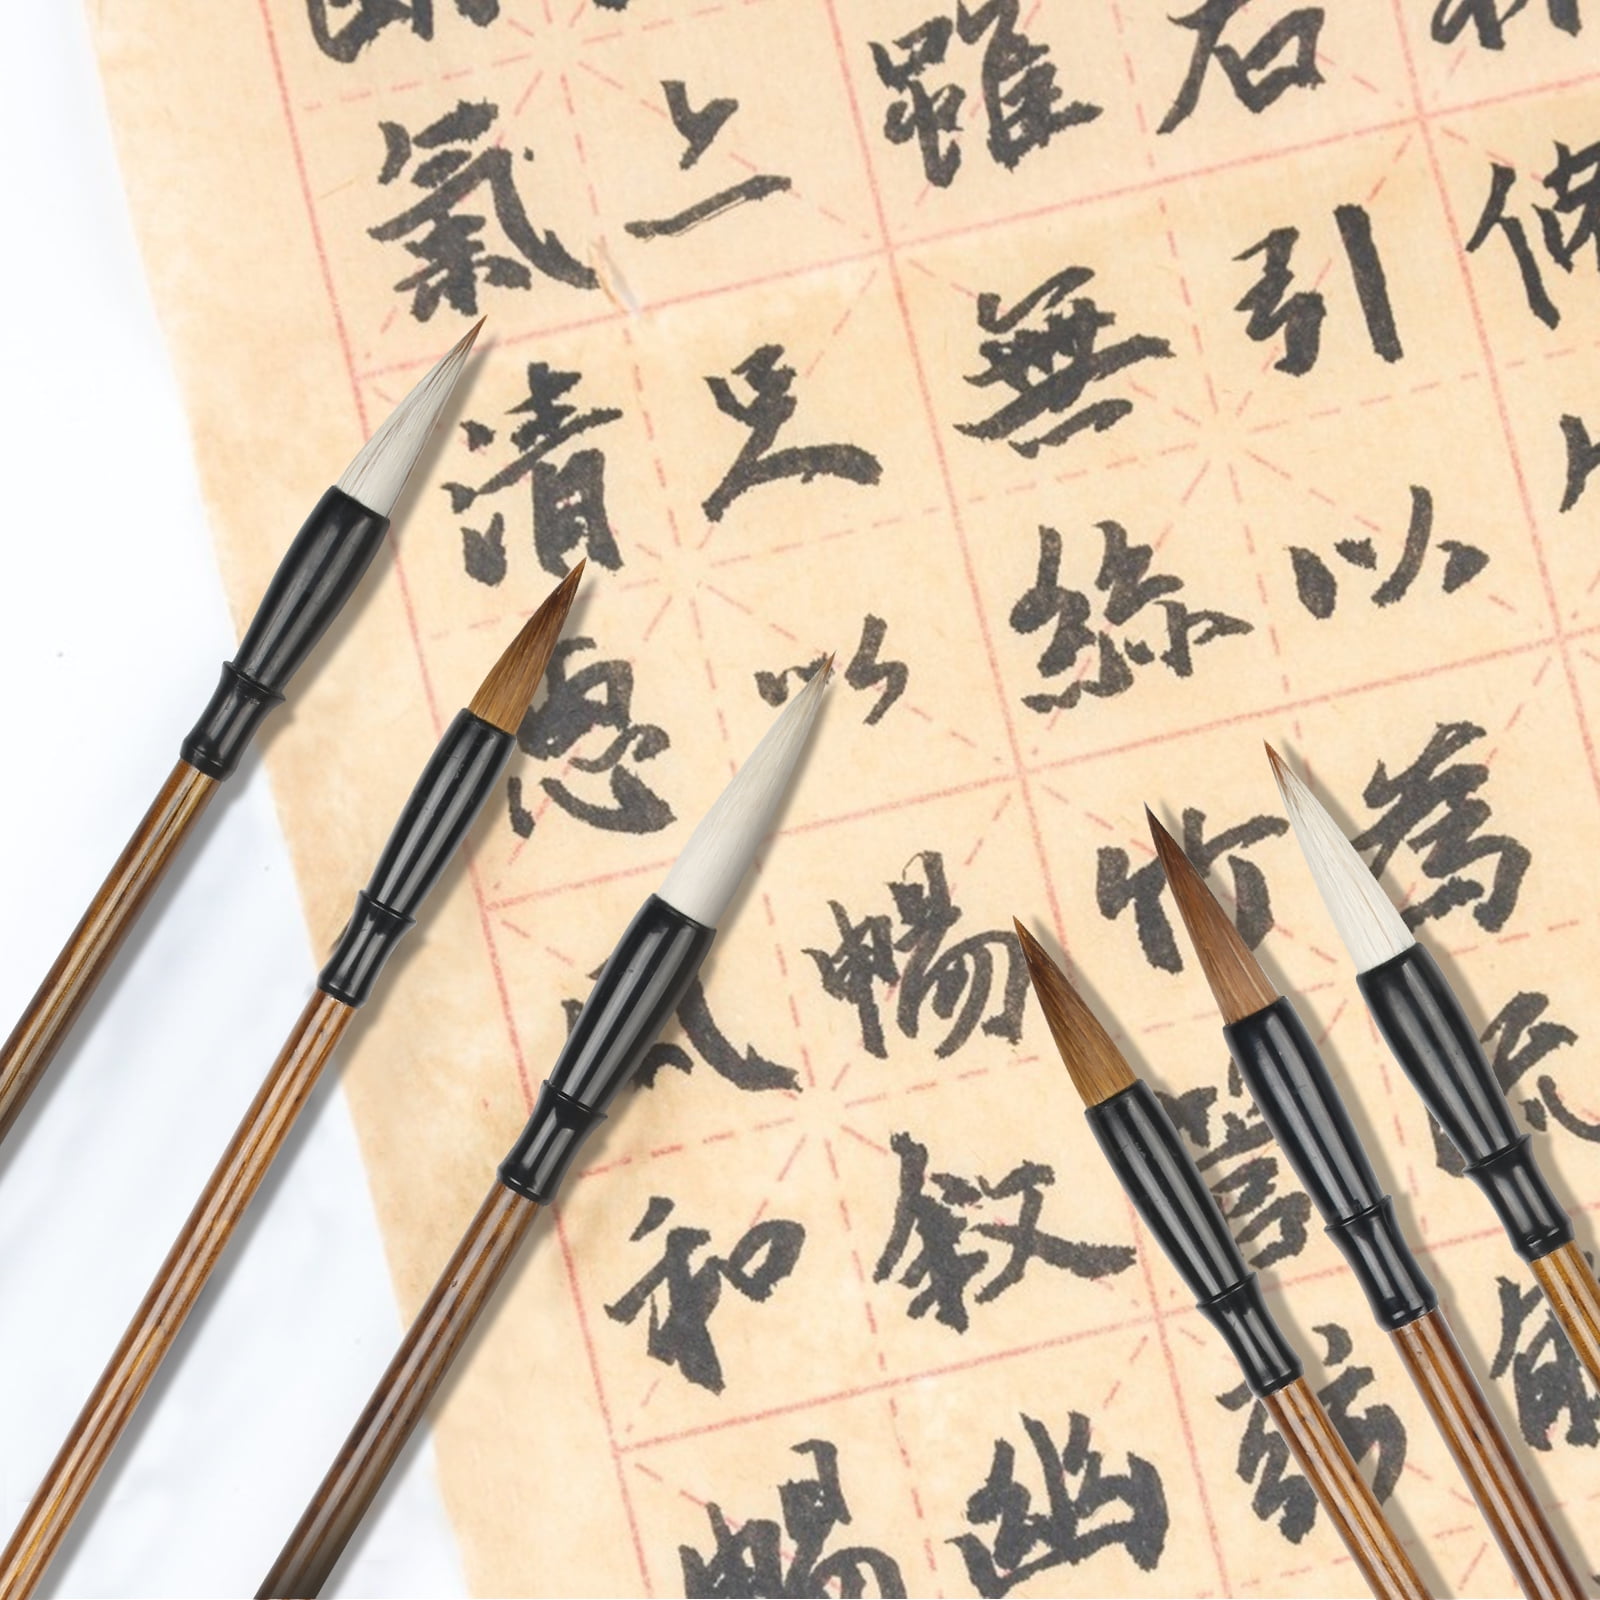  COHEALI 1 Set Calligraphy Markers Chinese Brush Pen